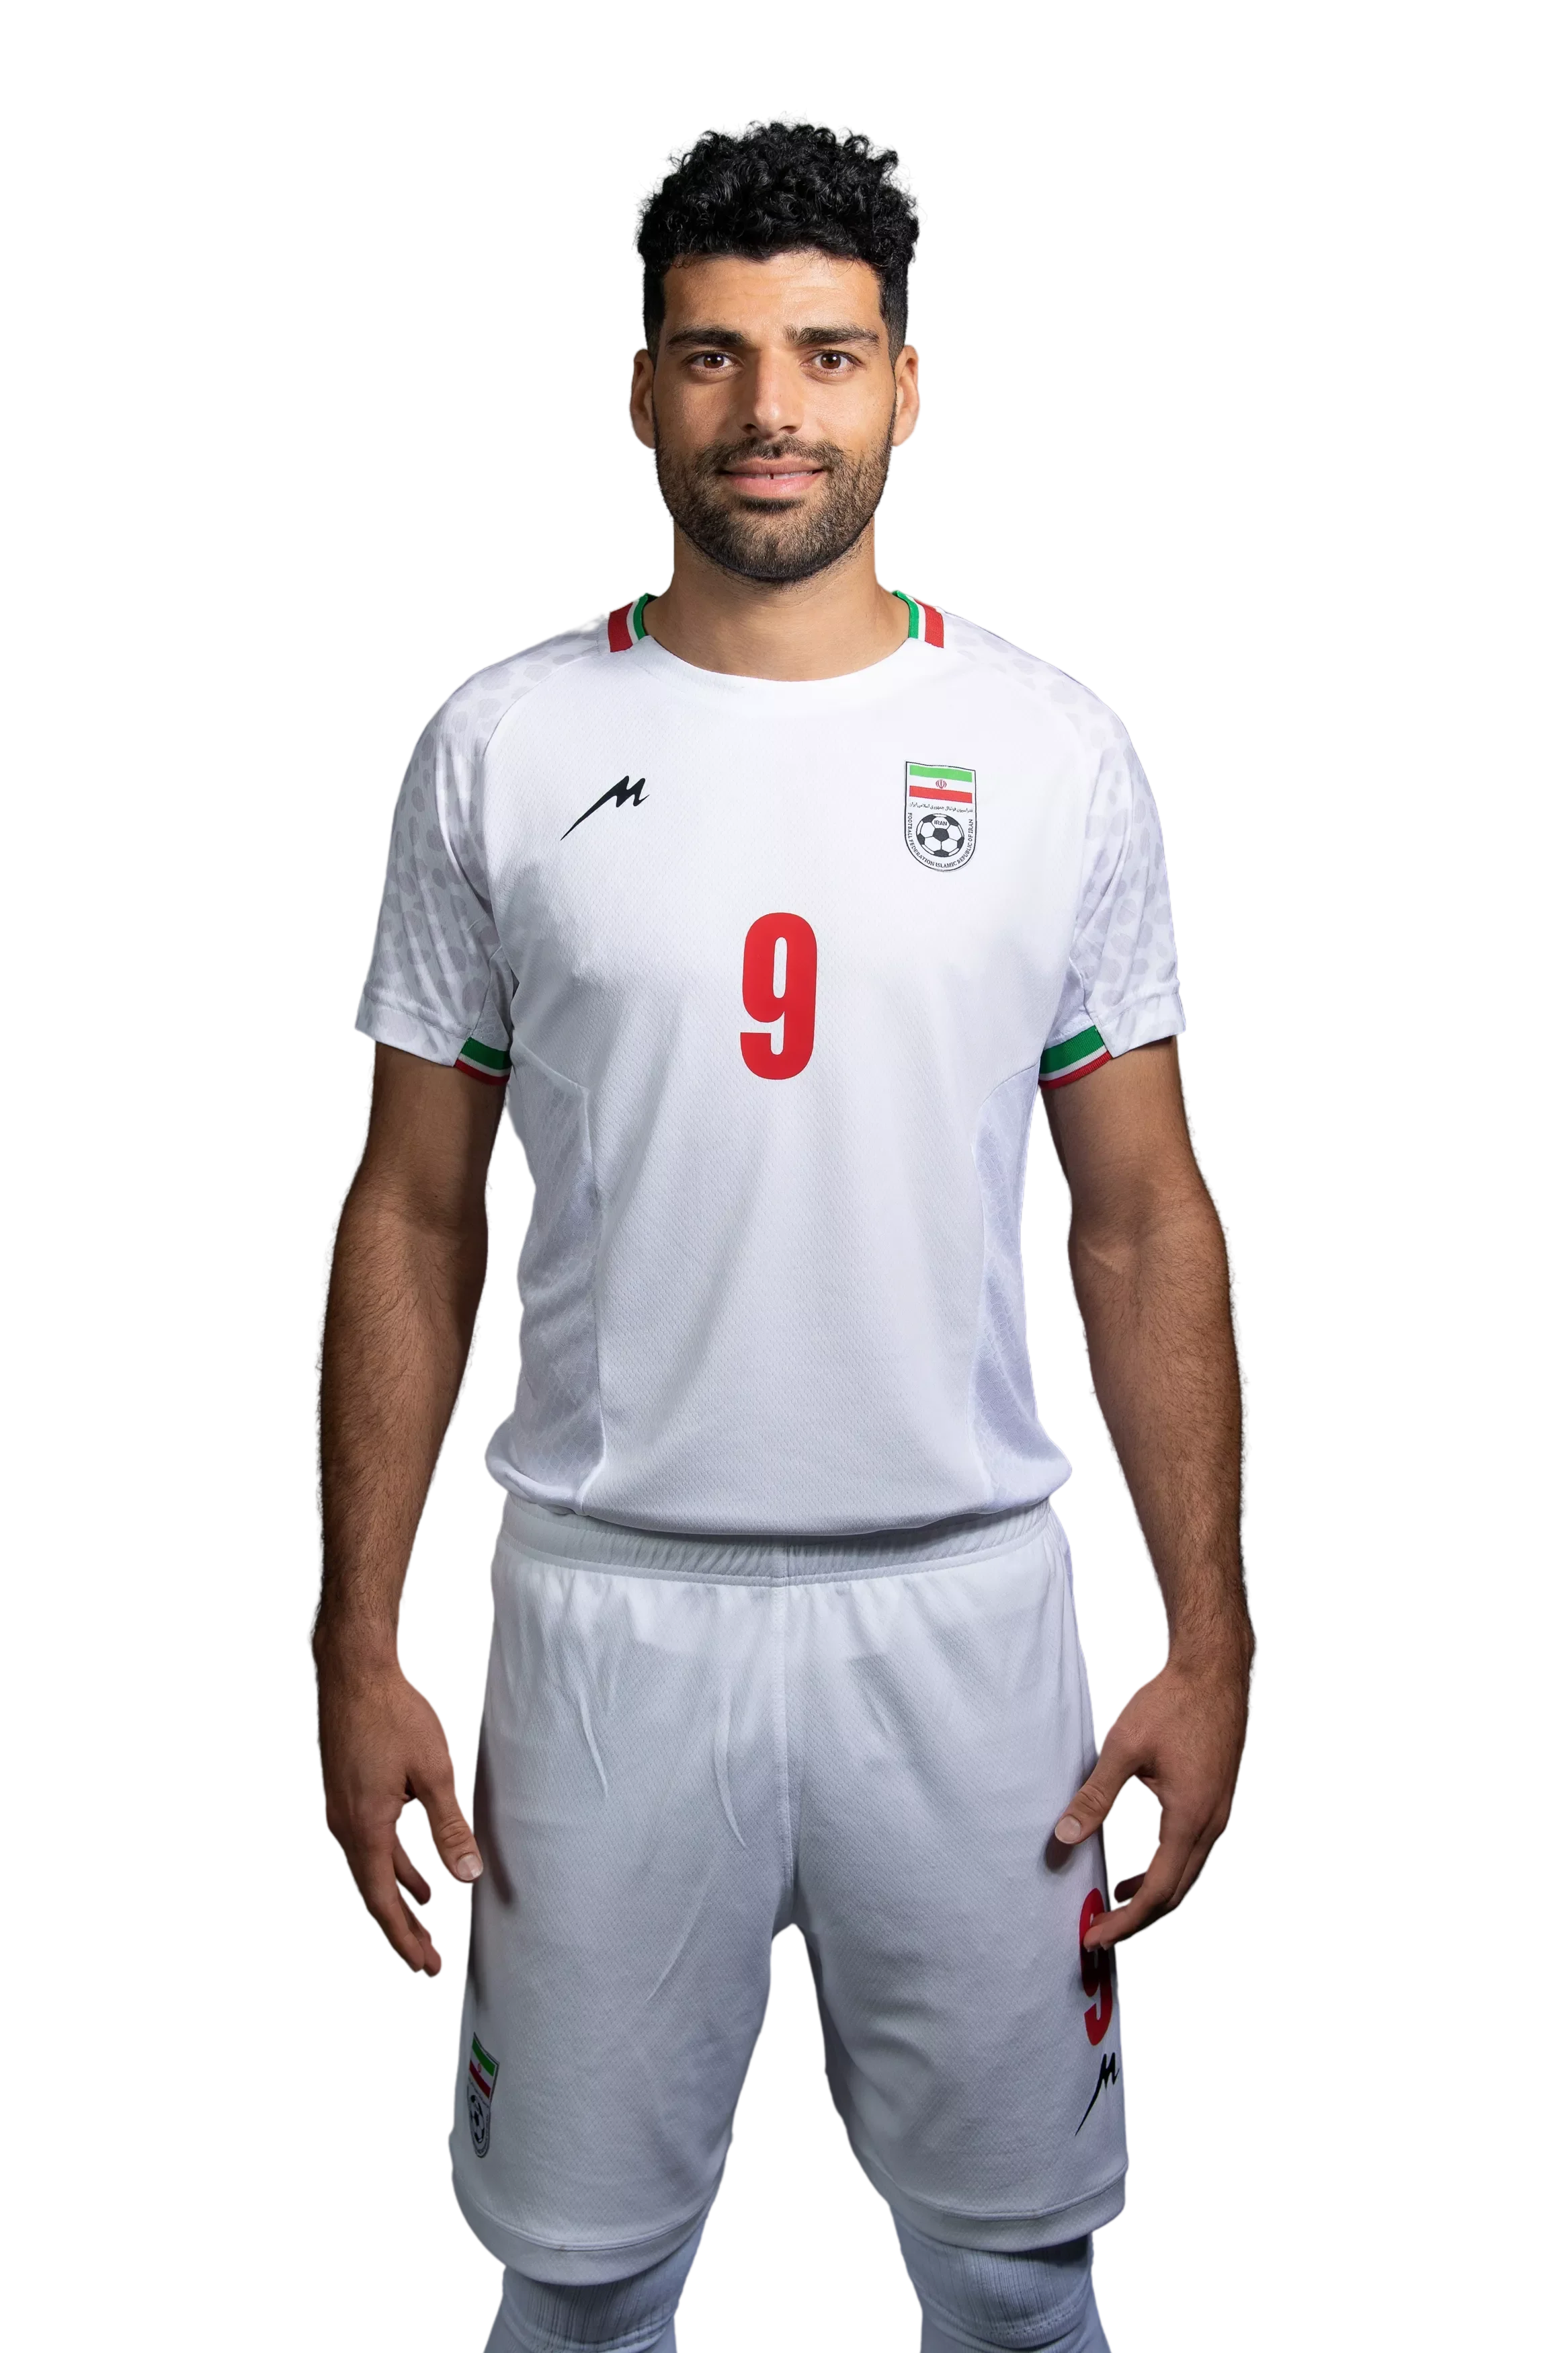 Shoja Khalilzadeh - Player profile 23/24